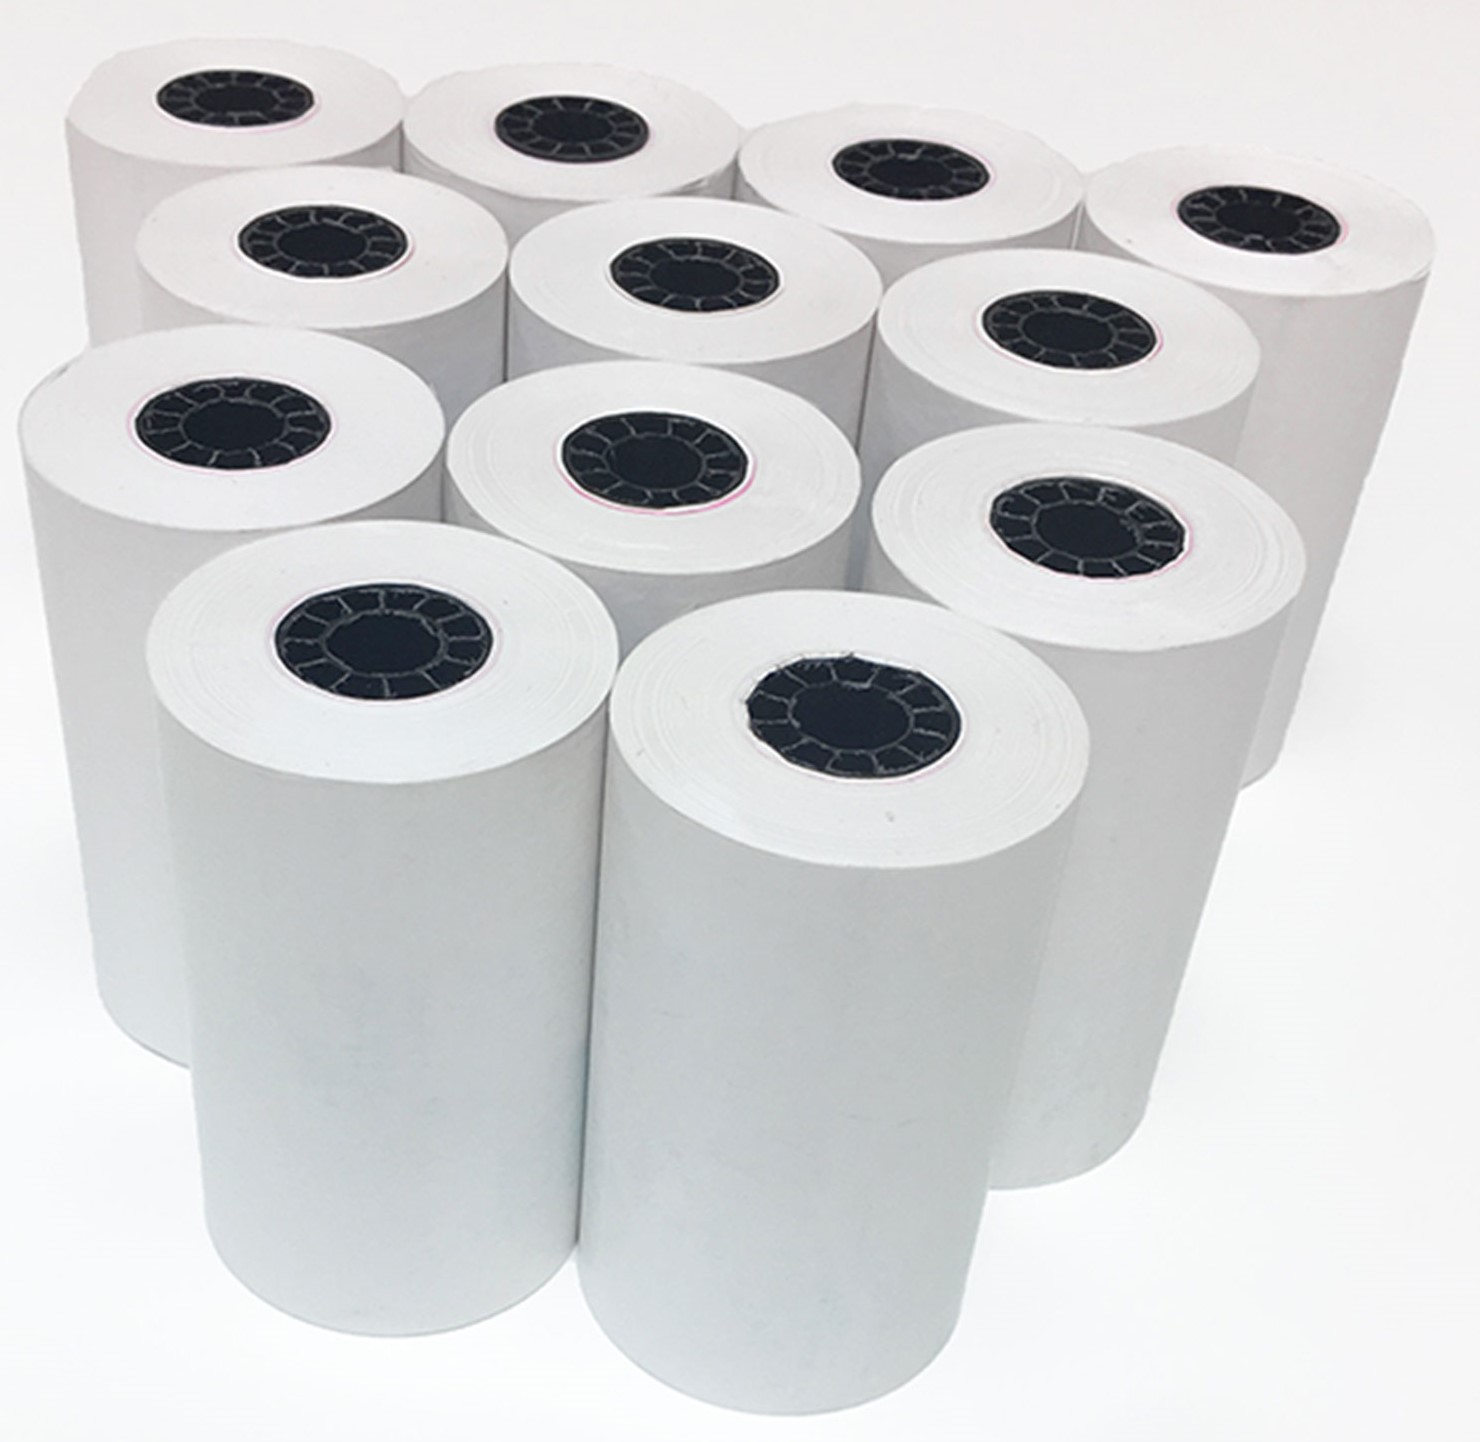 M100 Thermal Paper Rolls (2 1/4" x 150')